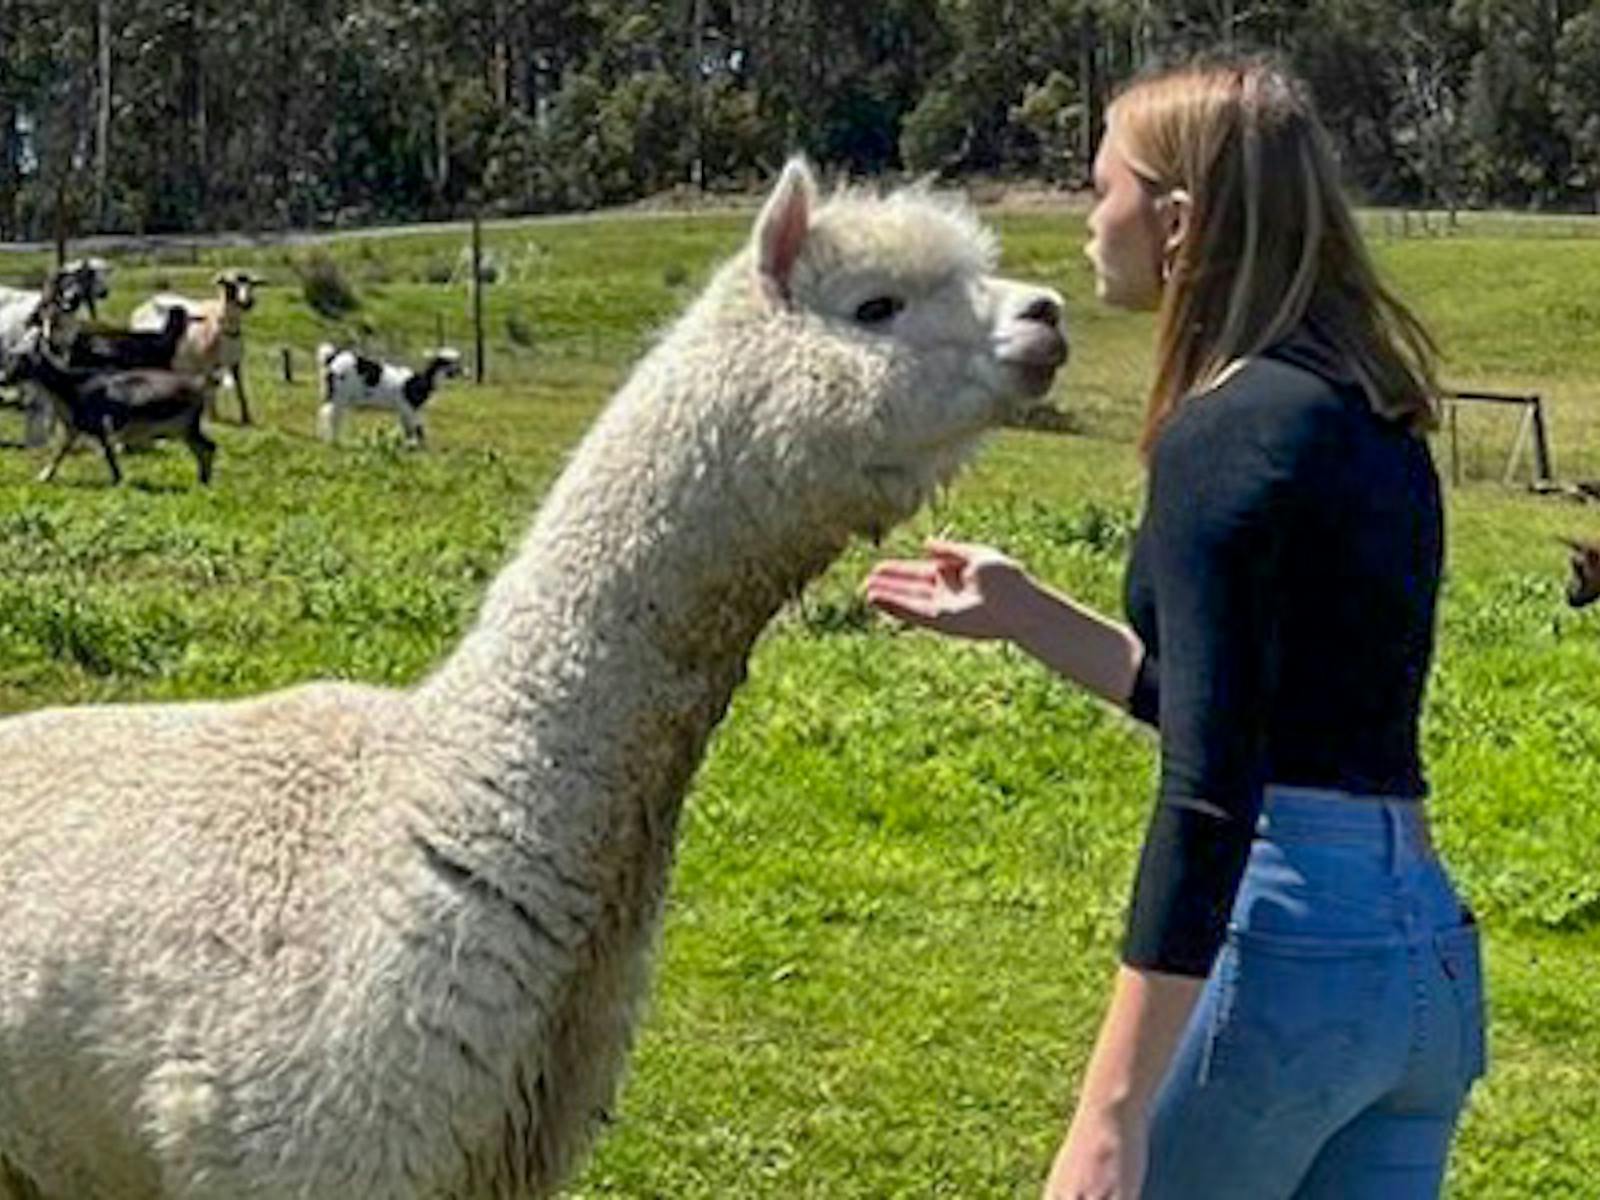 Lady meeting alpaca